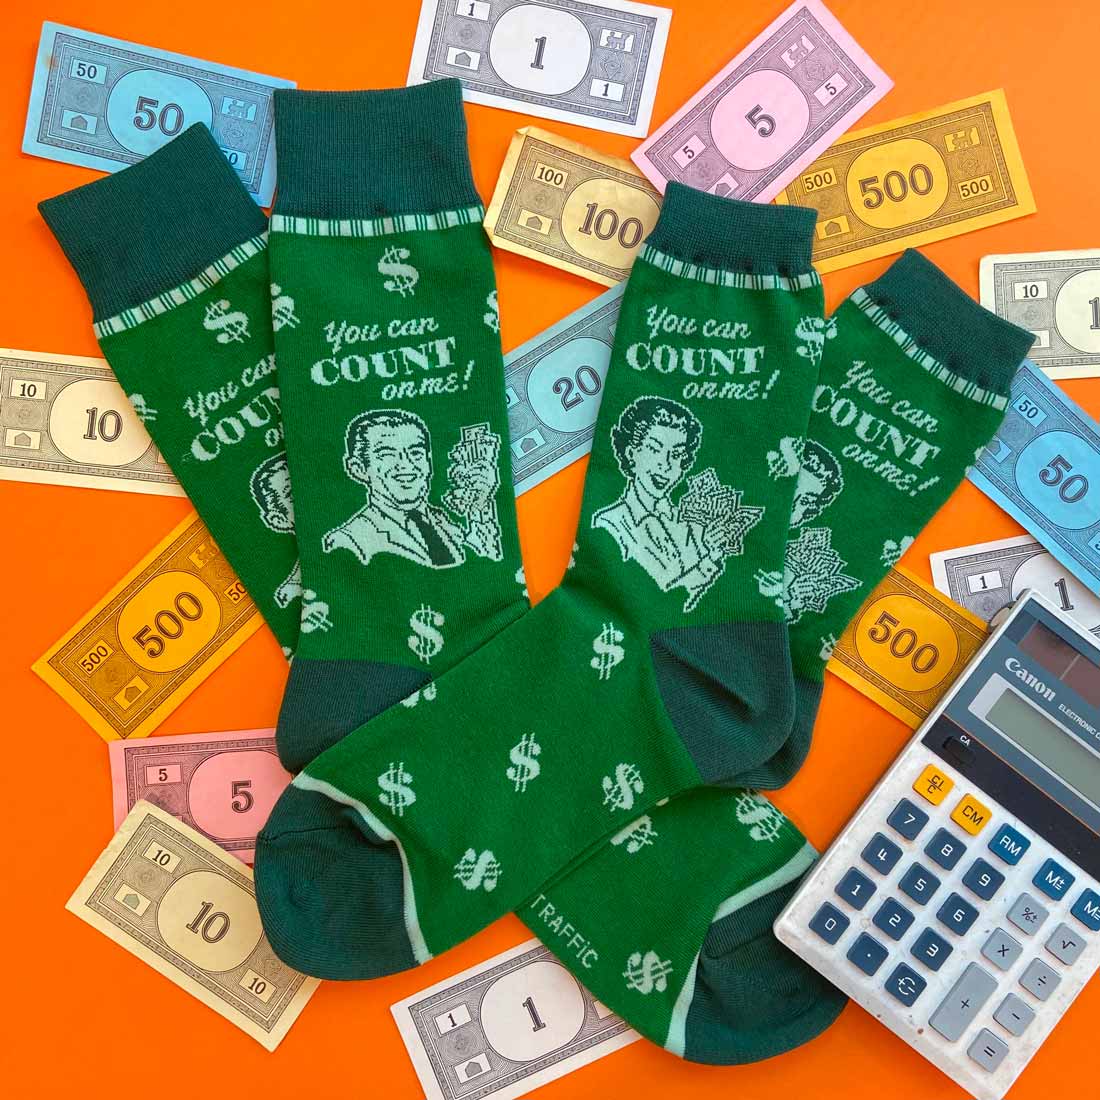 Men's Accountant Socks